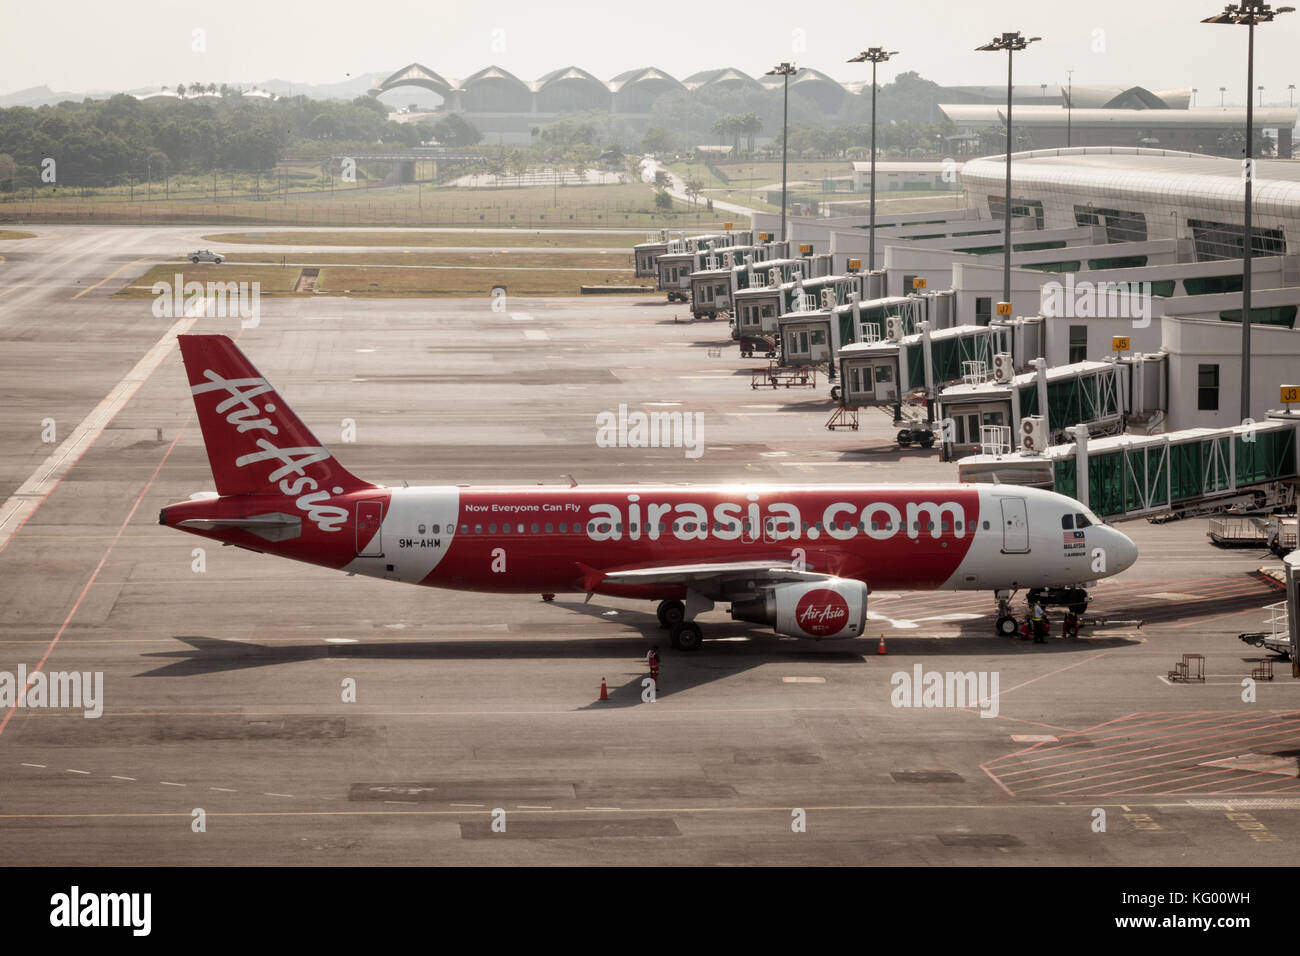 An AirAsia Bhd. A320 aircraft stands on the tarmac at Kuala Lumpur International Airport 2 (KLIA2) in Sepang, Selangor, Malaysia Stock Photo